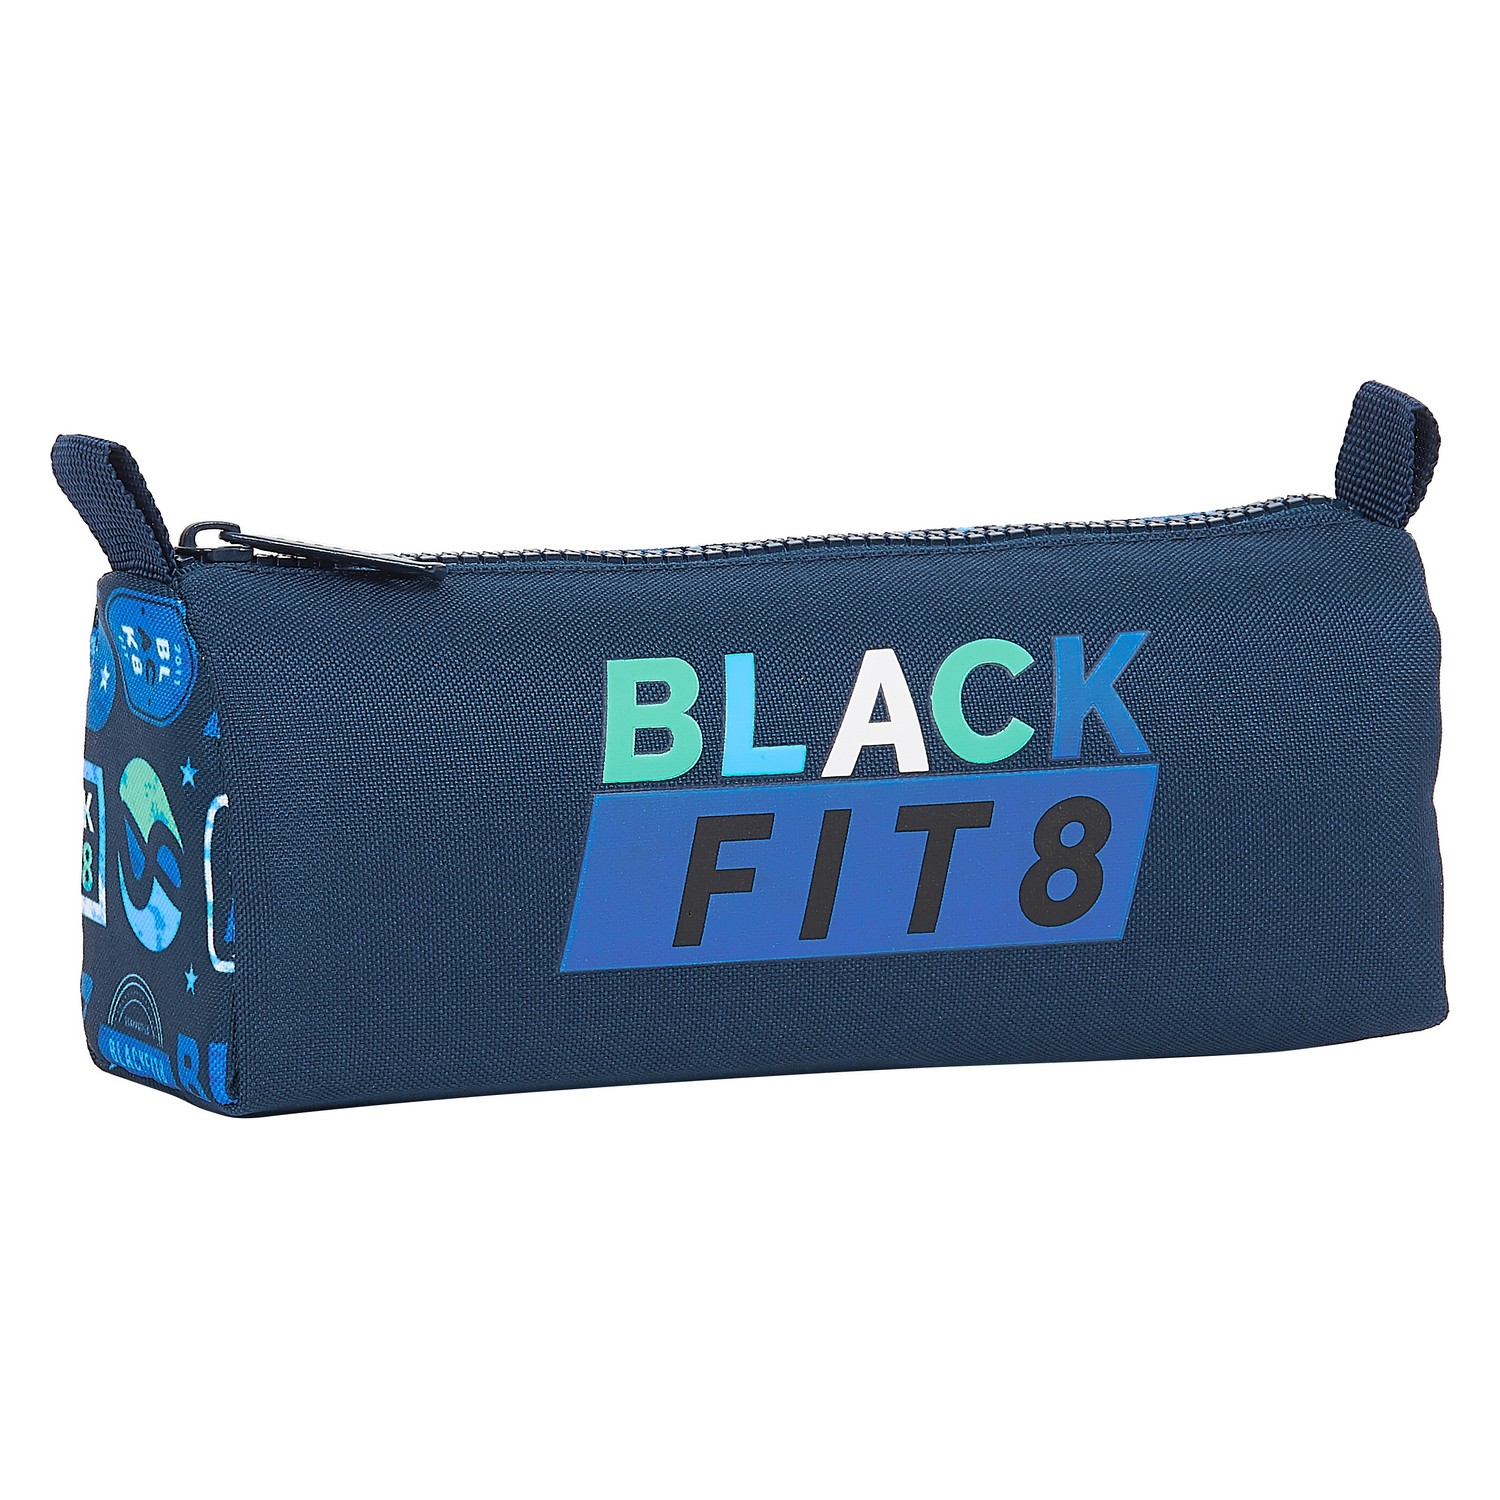 Coffret Retro BlackFit8 842141742 Blue marine (21 x 8 x 7 cm)